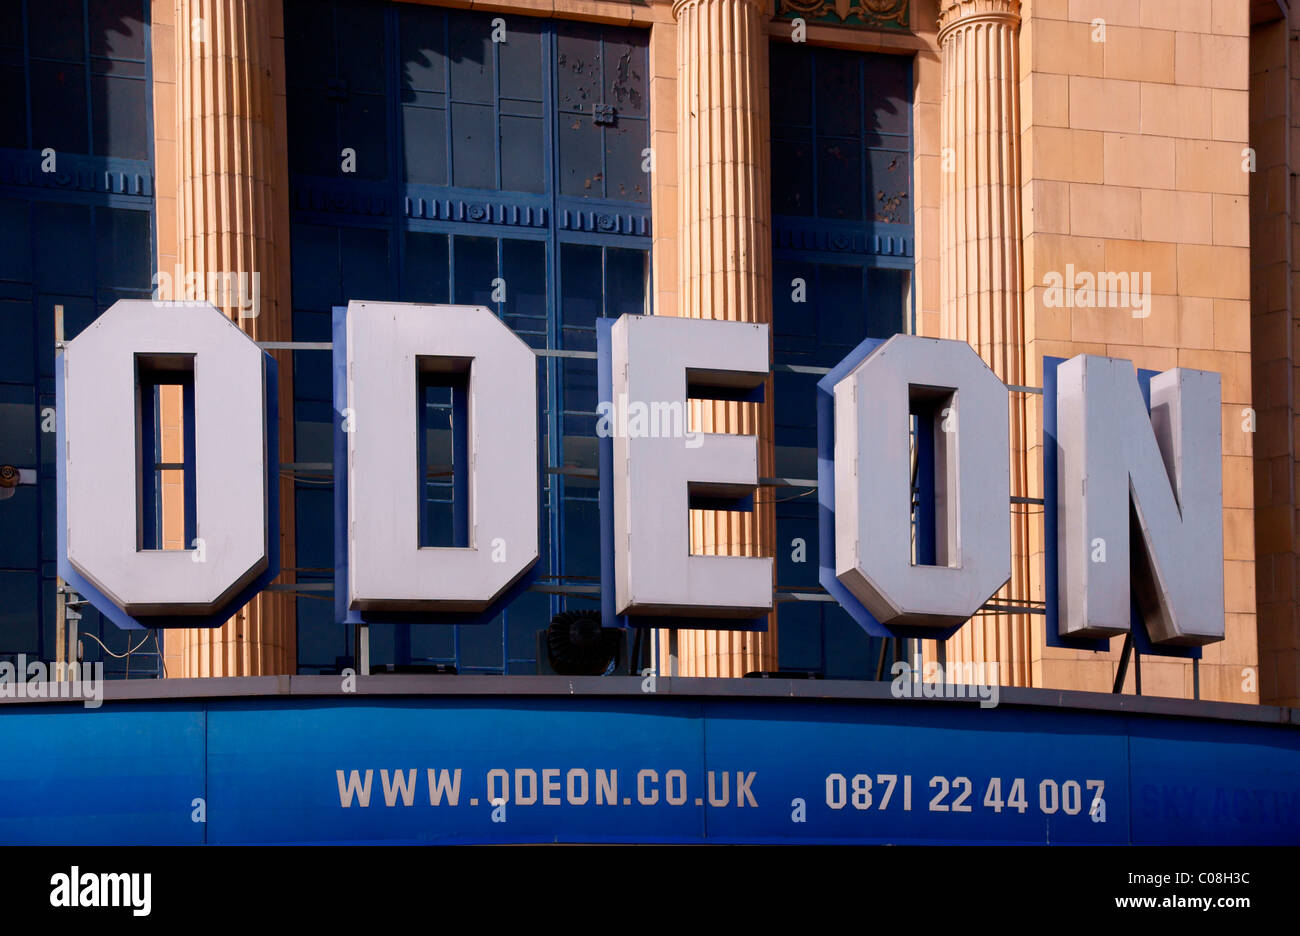 Odeon Cinema sign Stock Photo